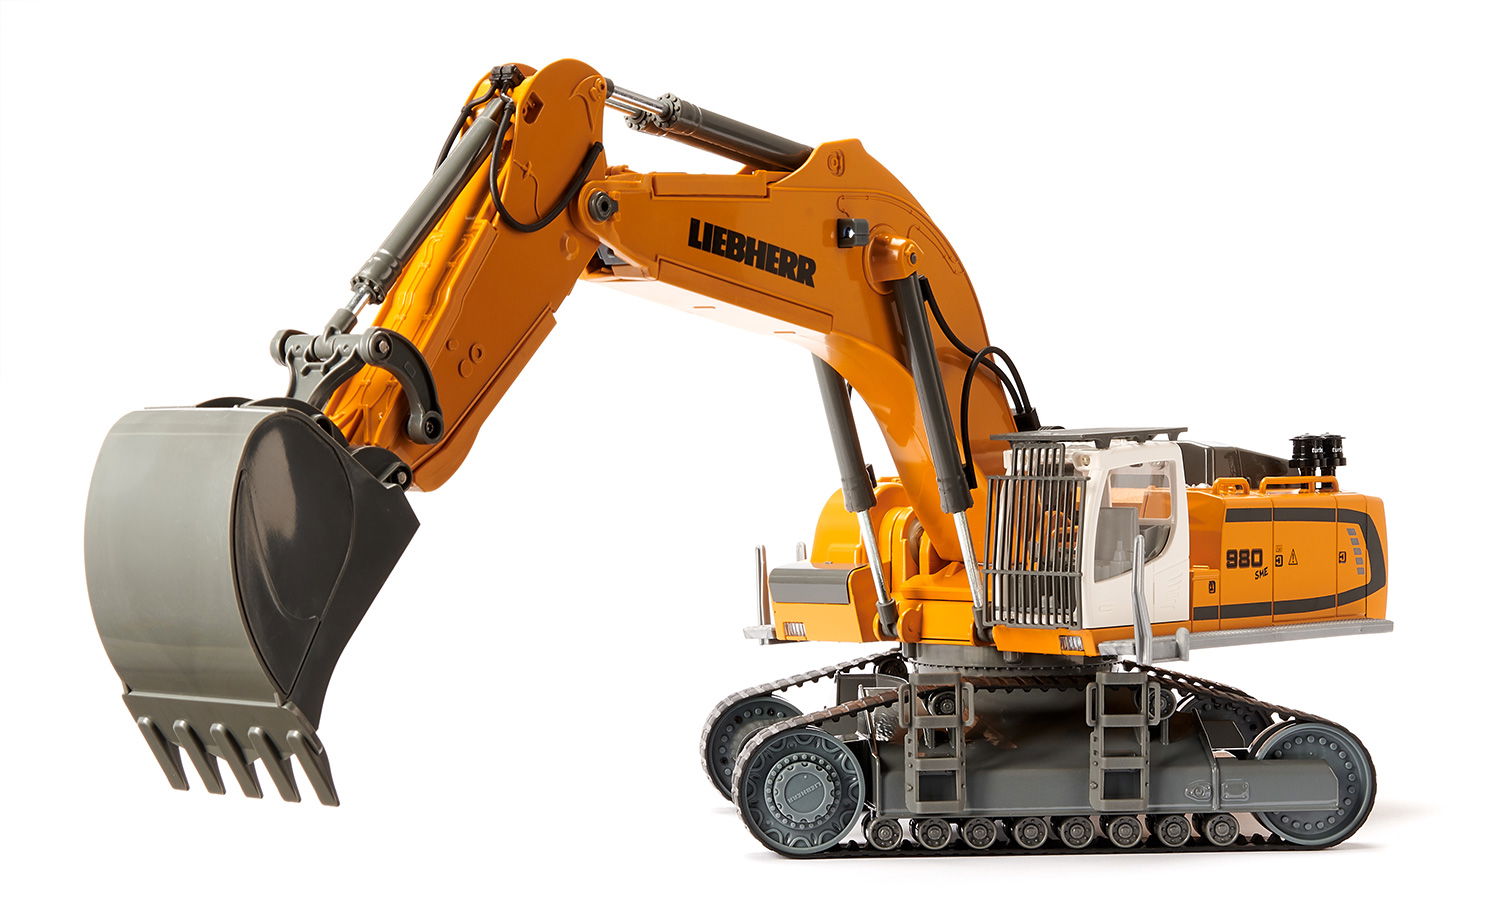 Liebherr R980 SME Crawler excavator with Bluetooth app control 